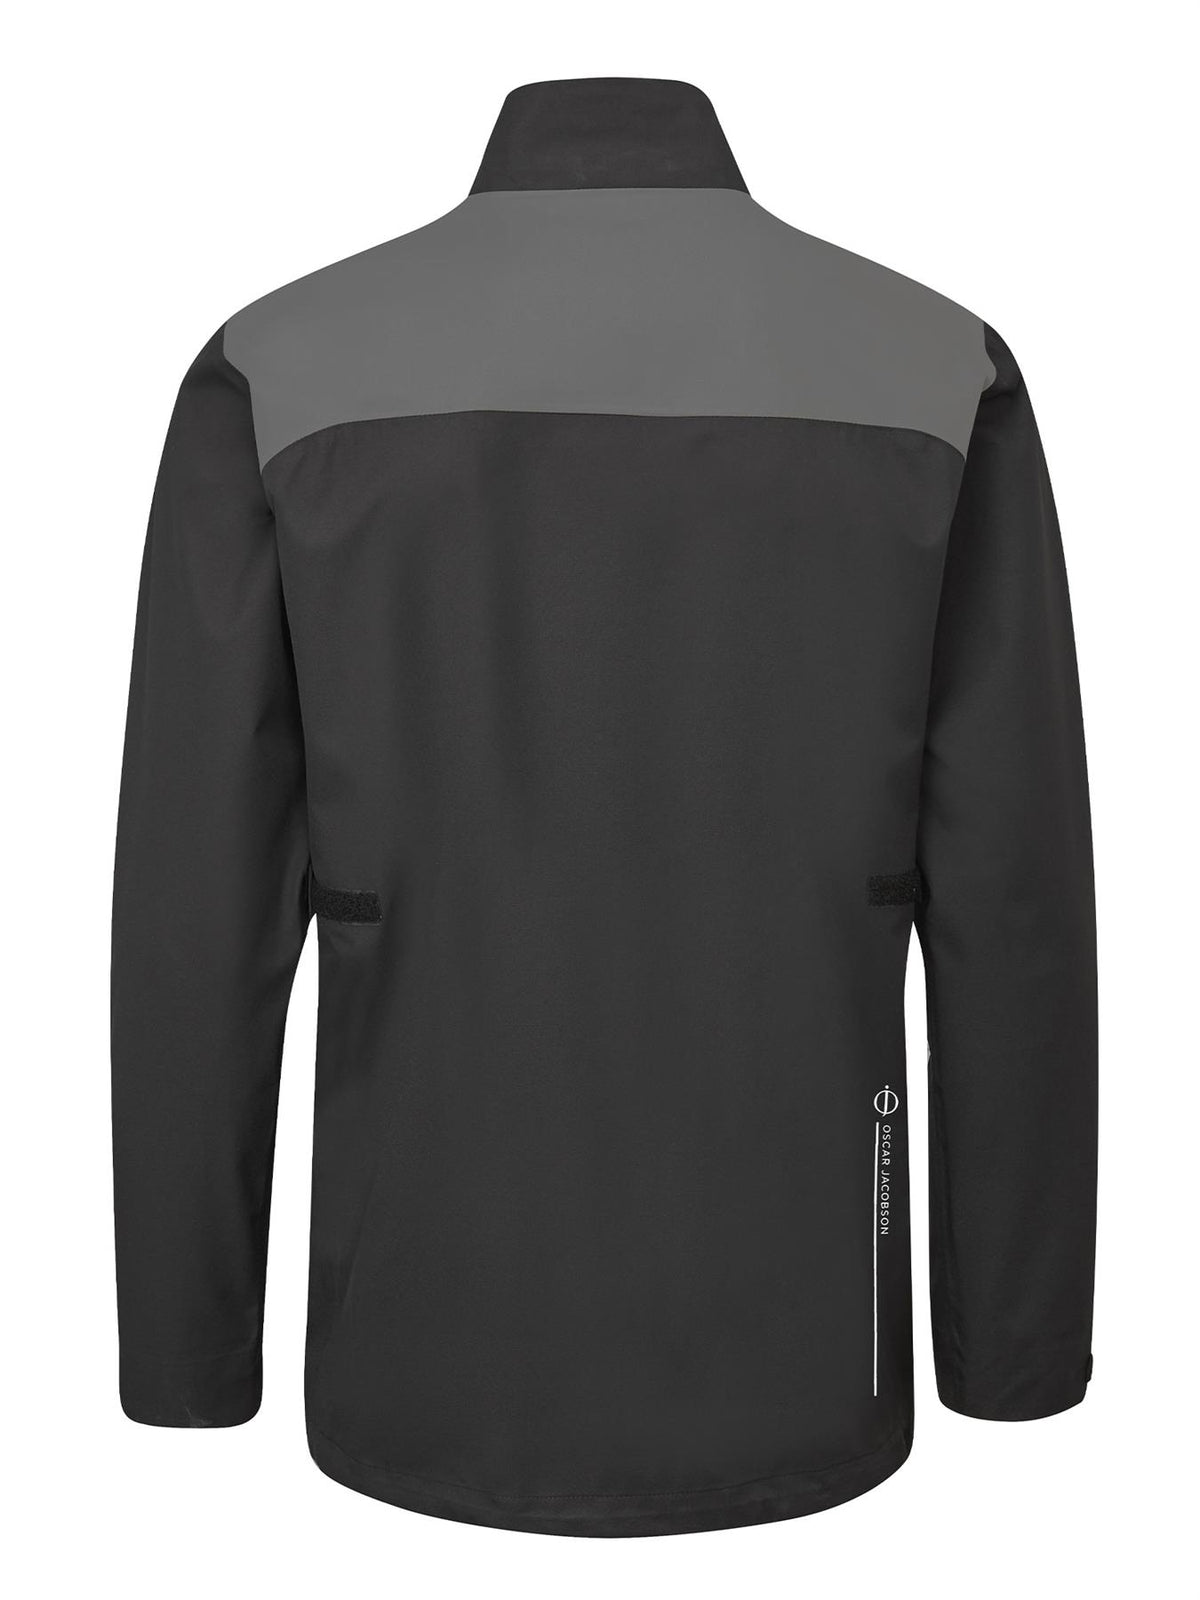 Greylands Lightweight Waterproof Jacket